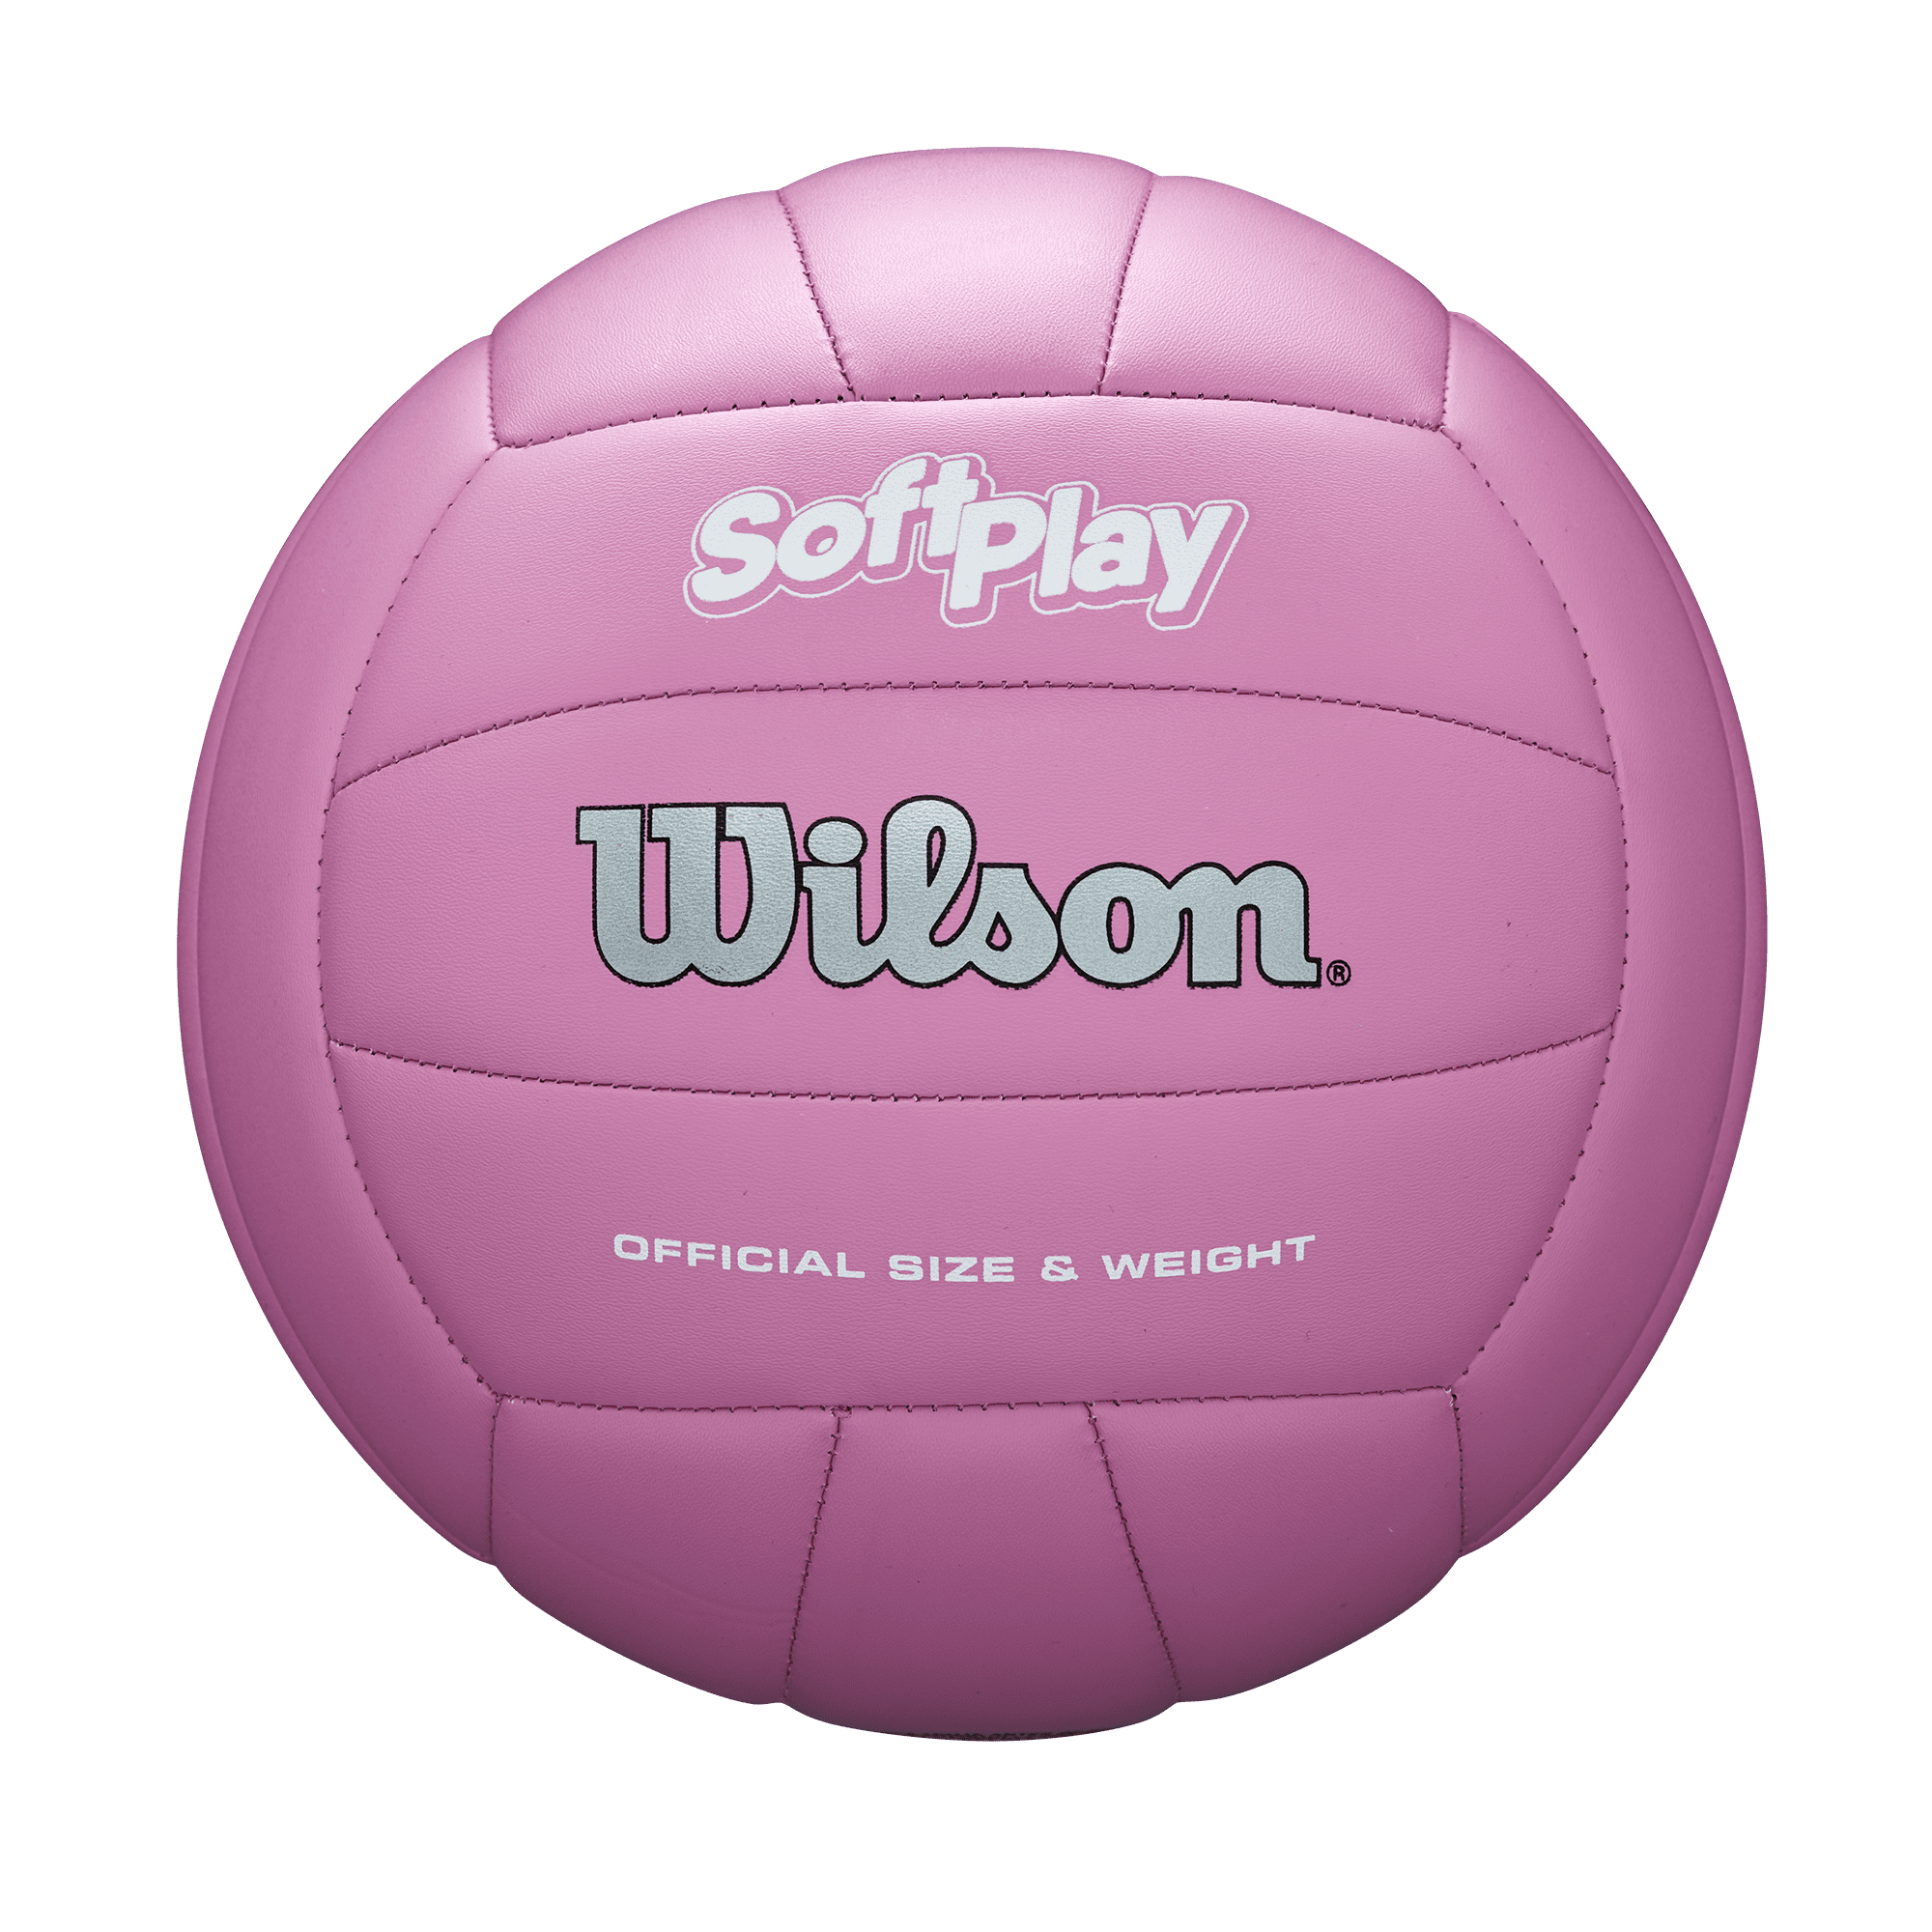 Volleyball Equipment - Wilson Volleyball